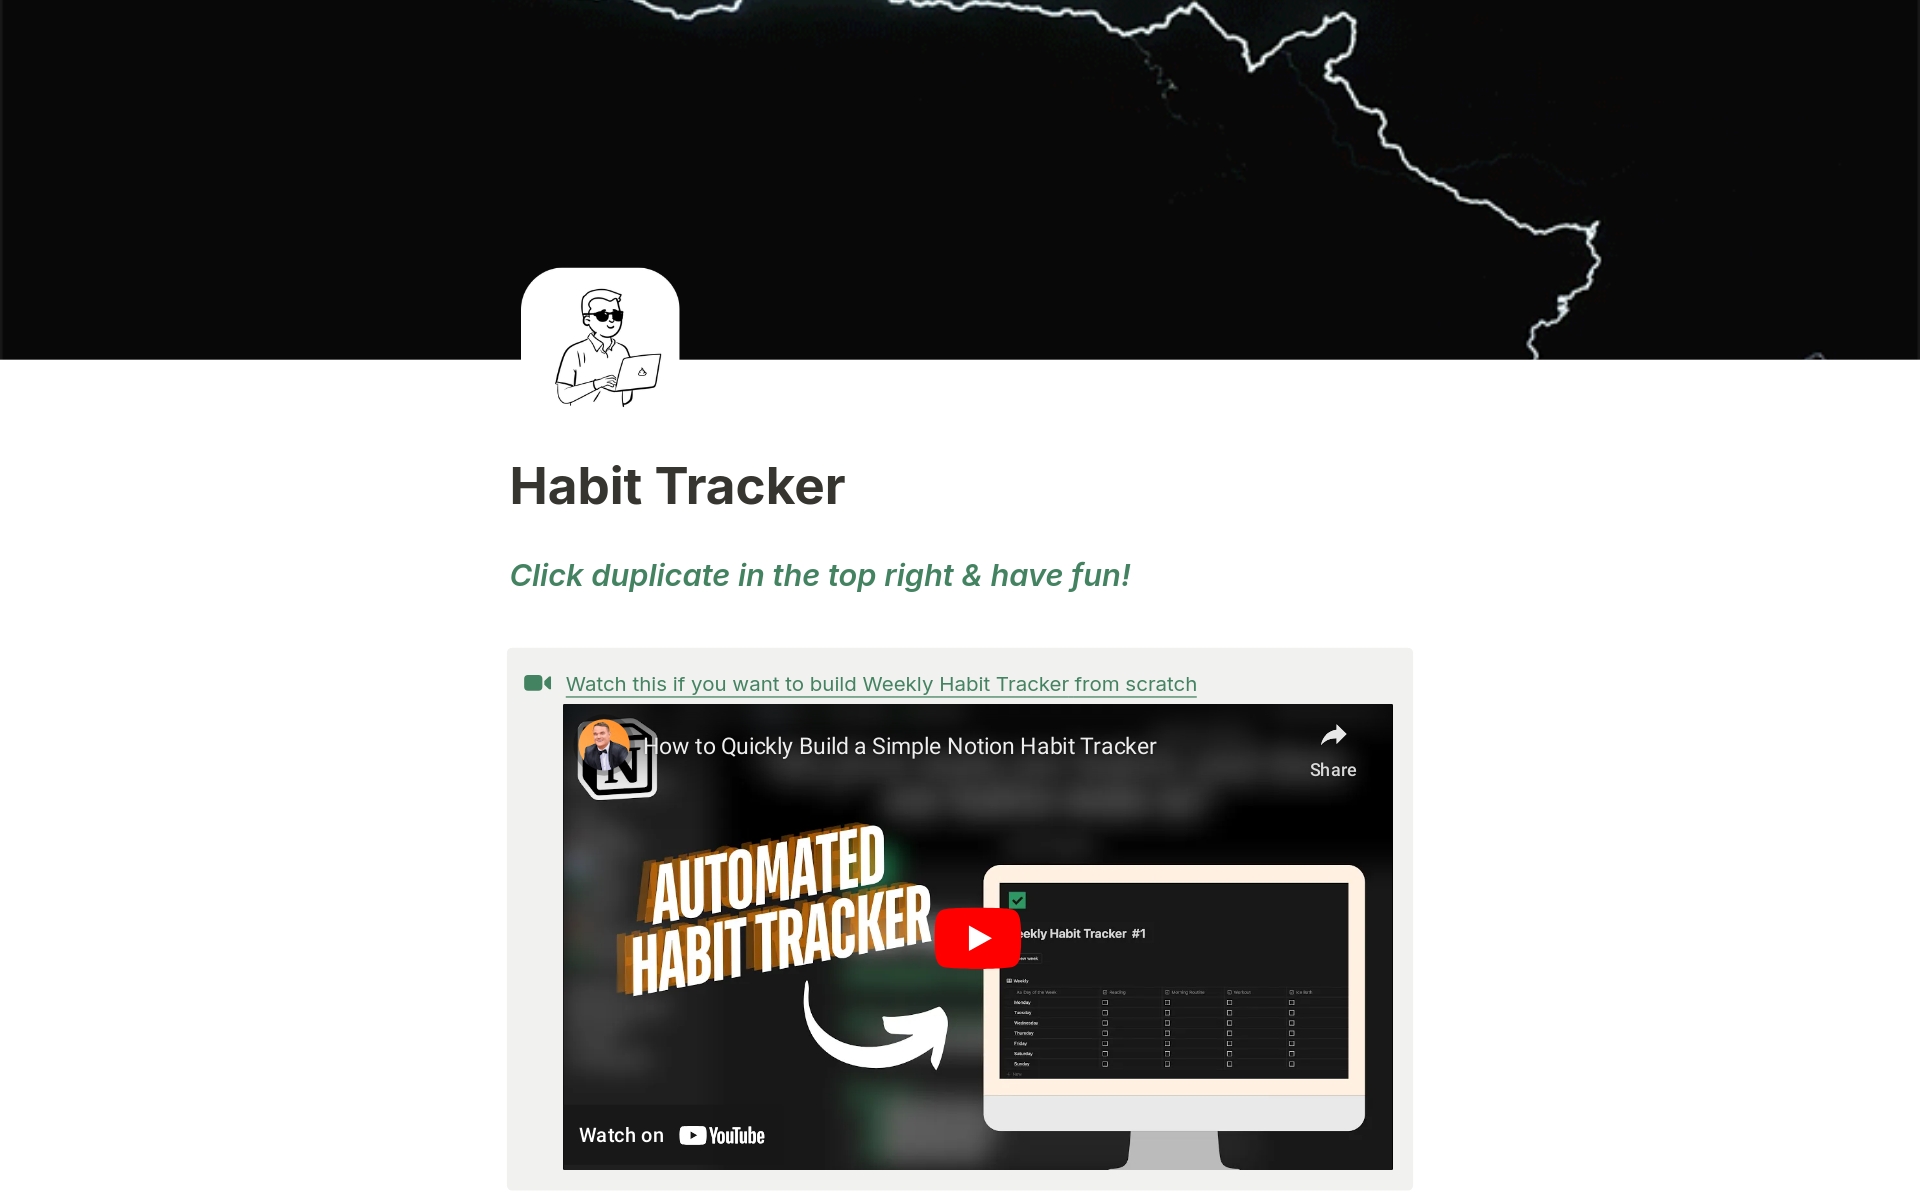 Aperçu du modèle de Simple Habit Tracker